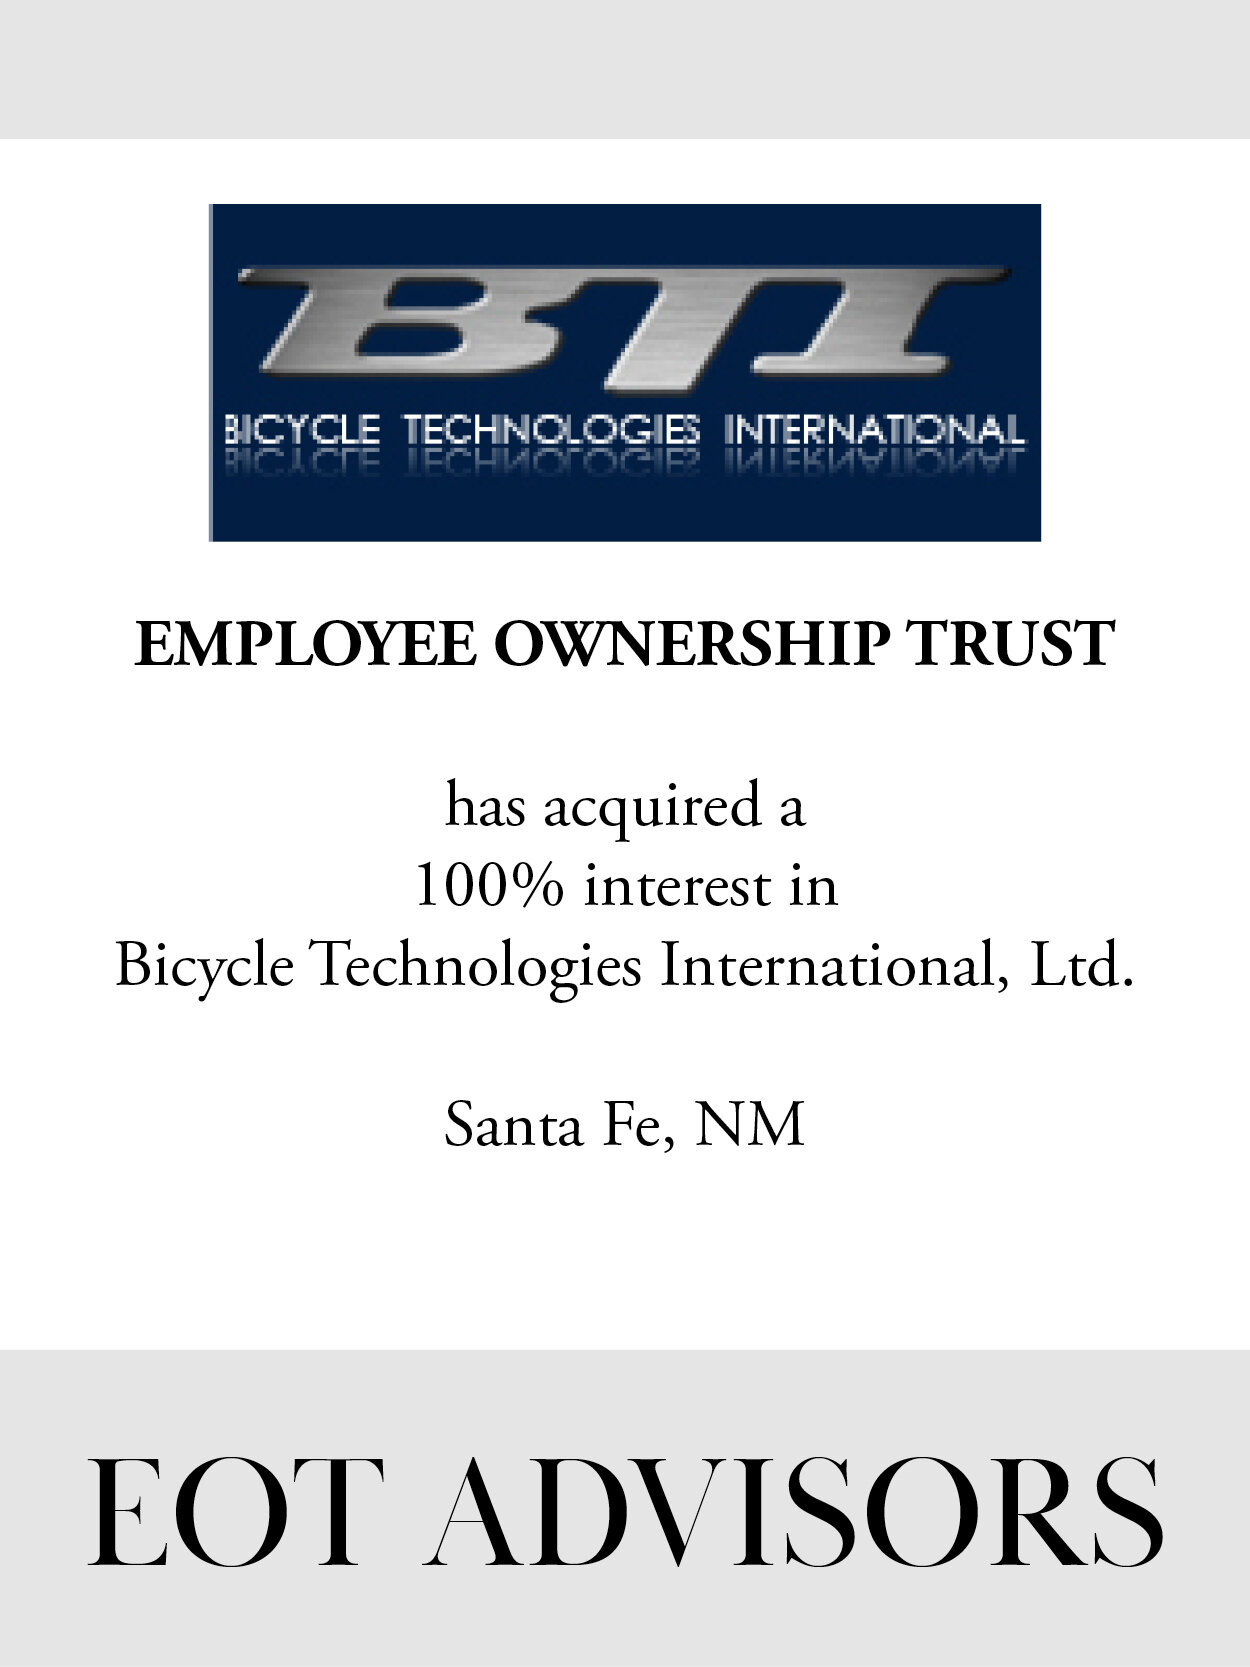 Bicycle Technologies International (BTI)